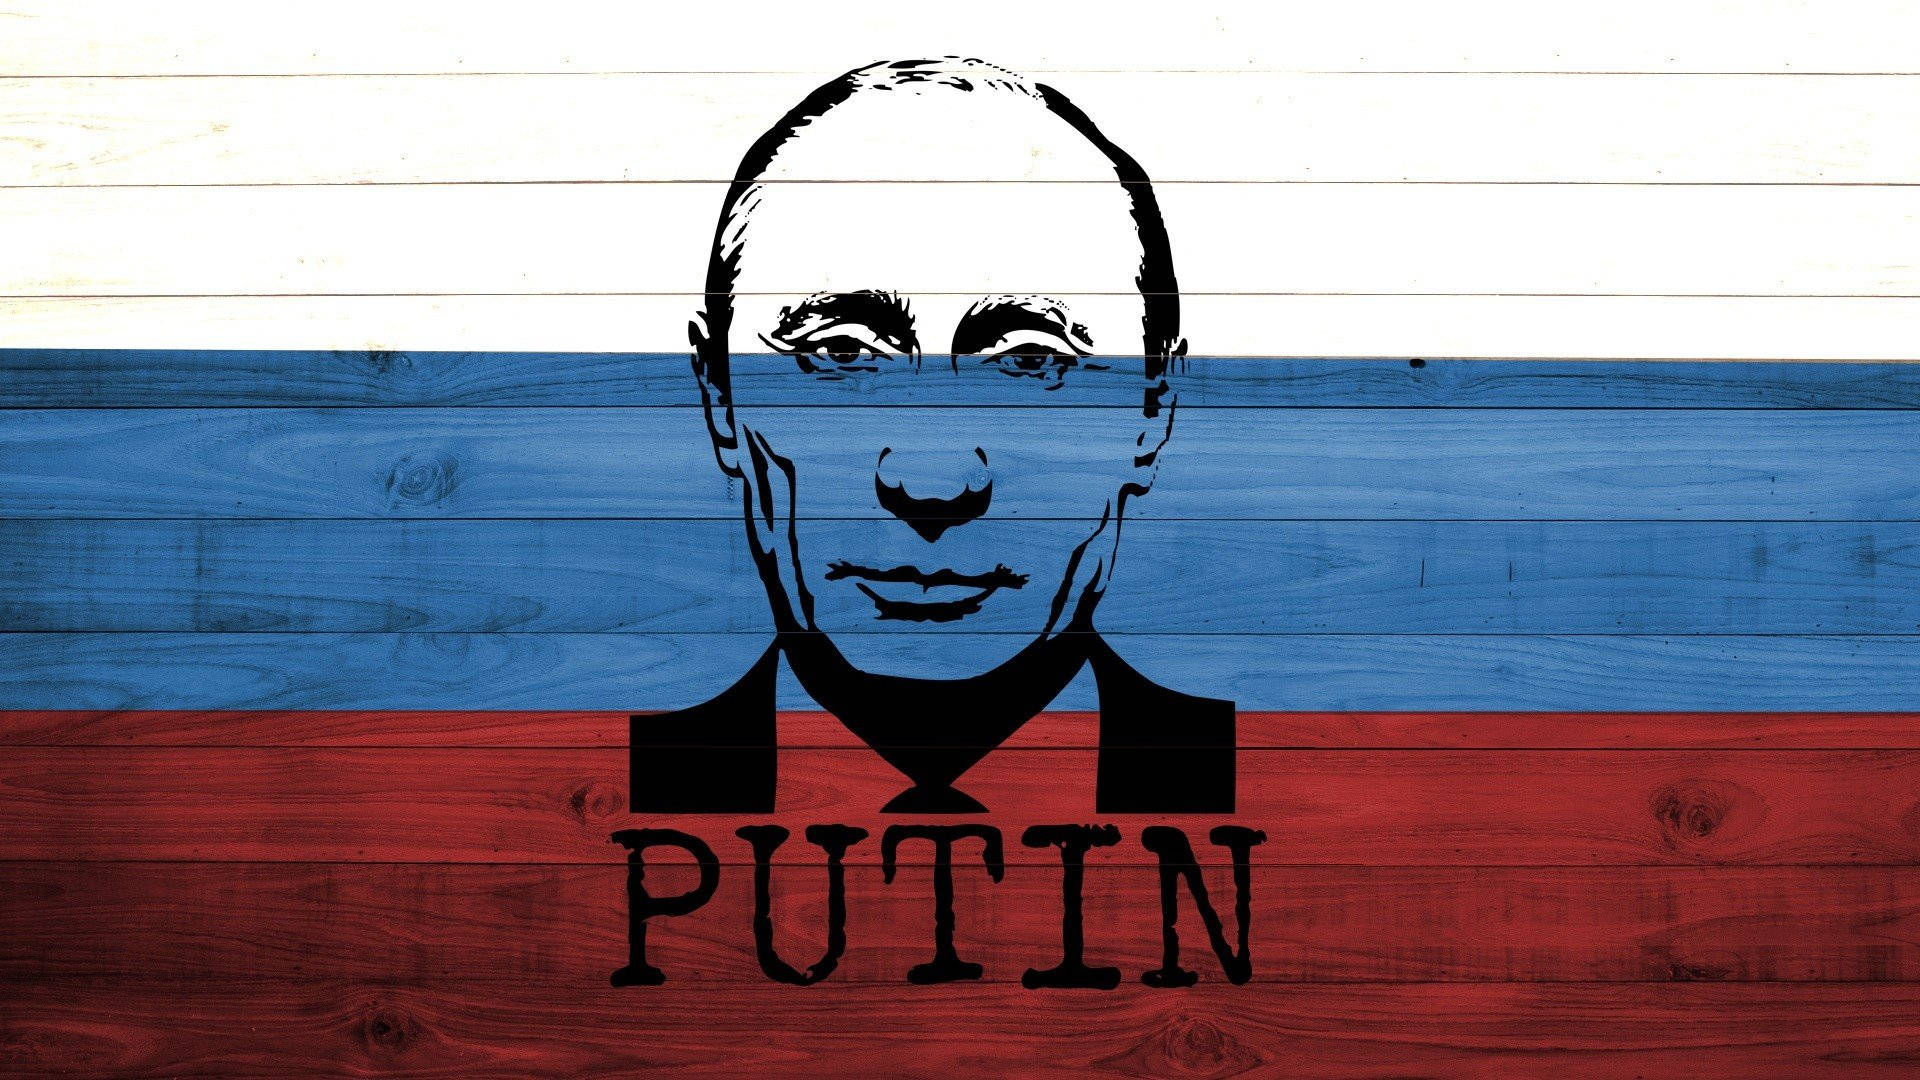 Russia President Putin Wallpaper